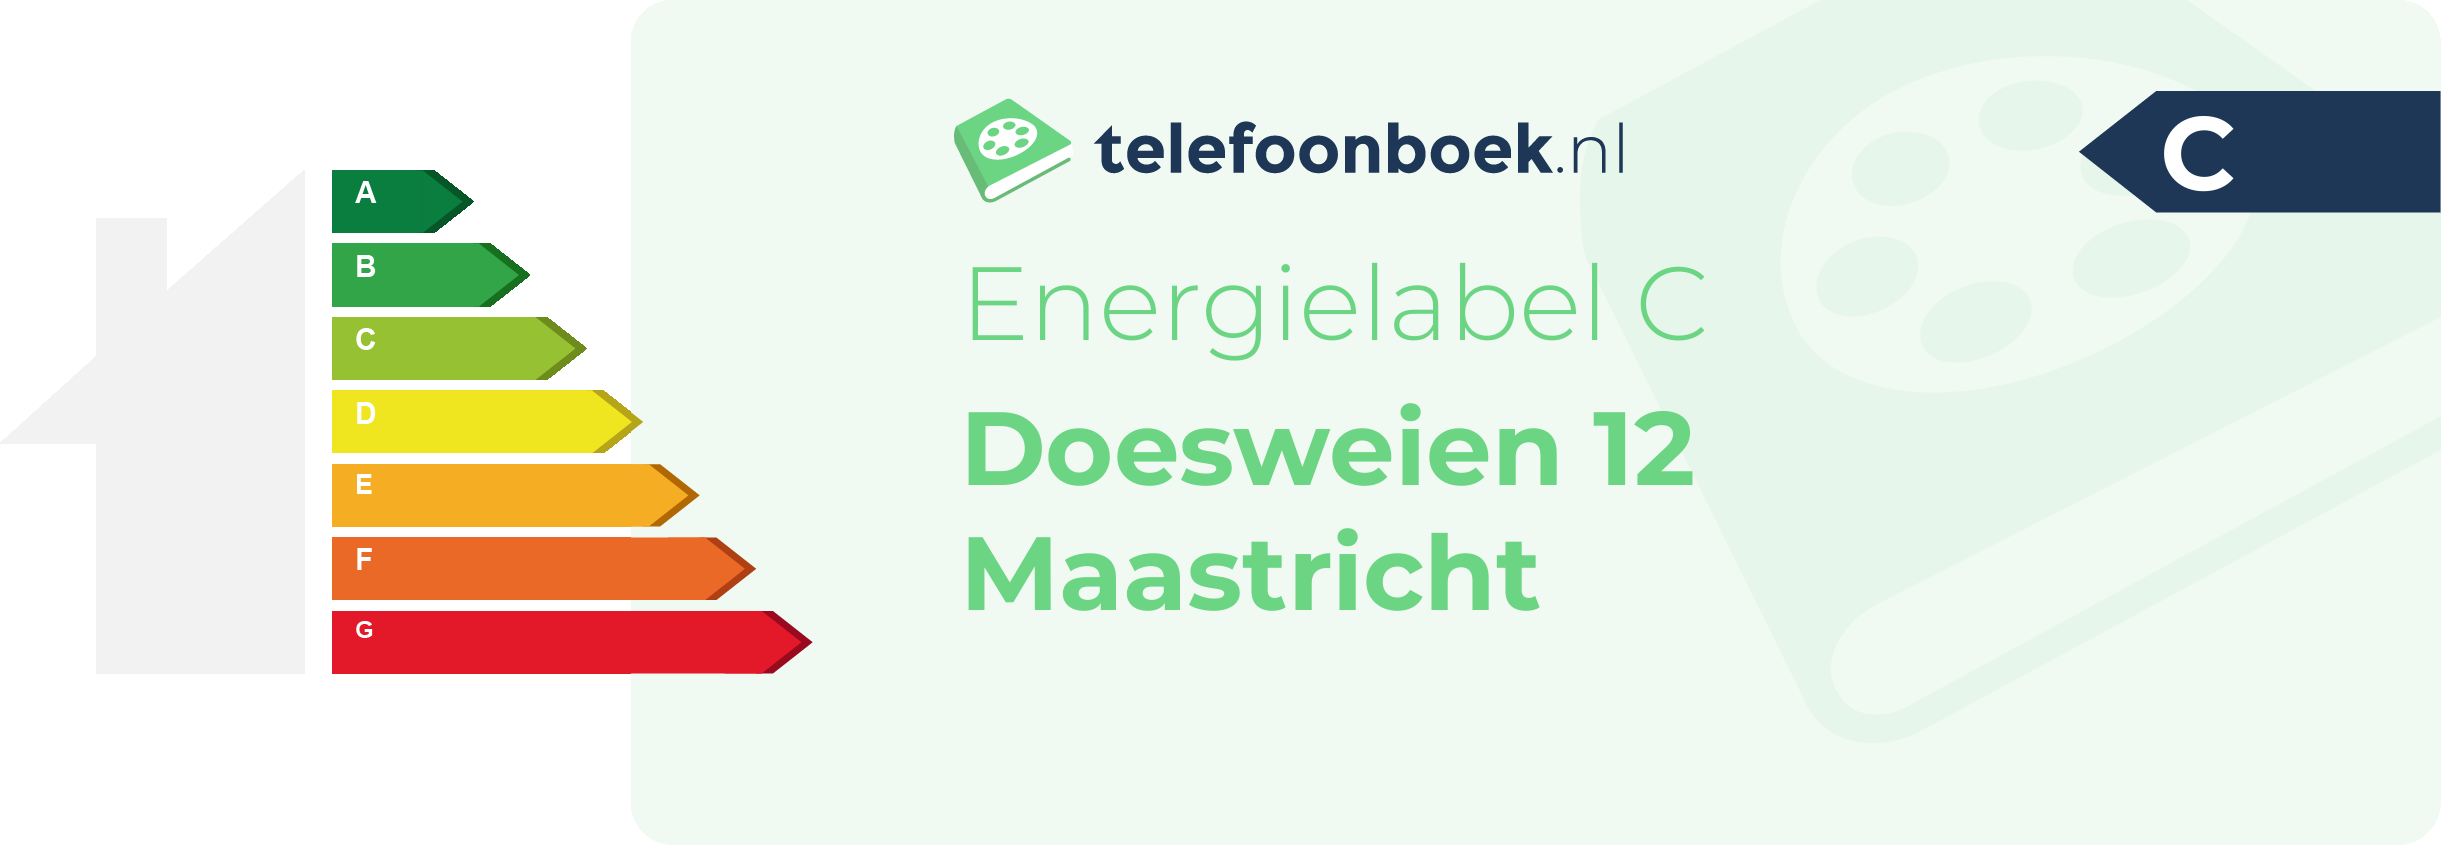 Energielabel Doesweien 12 Maastricht